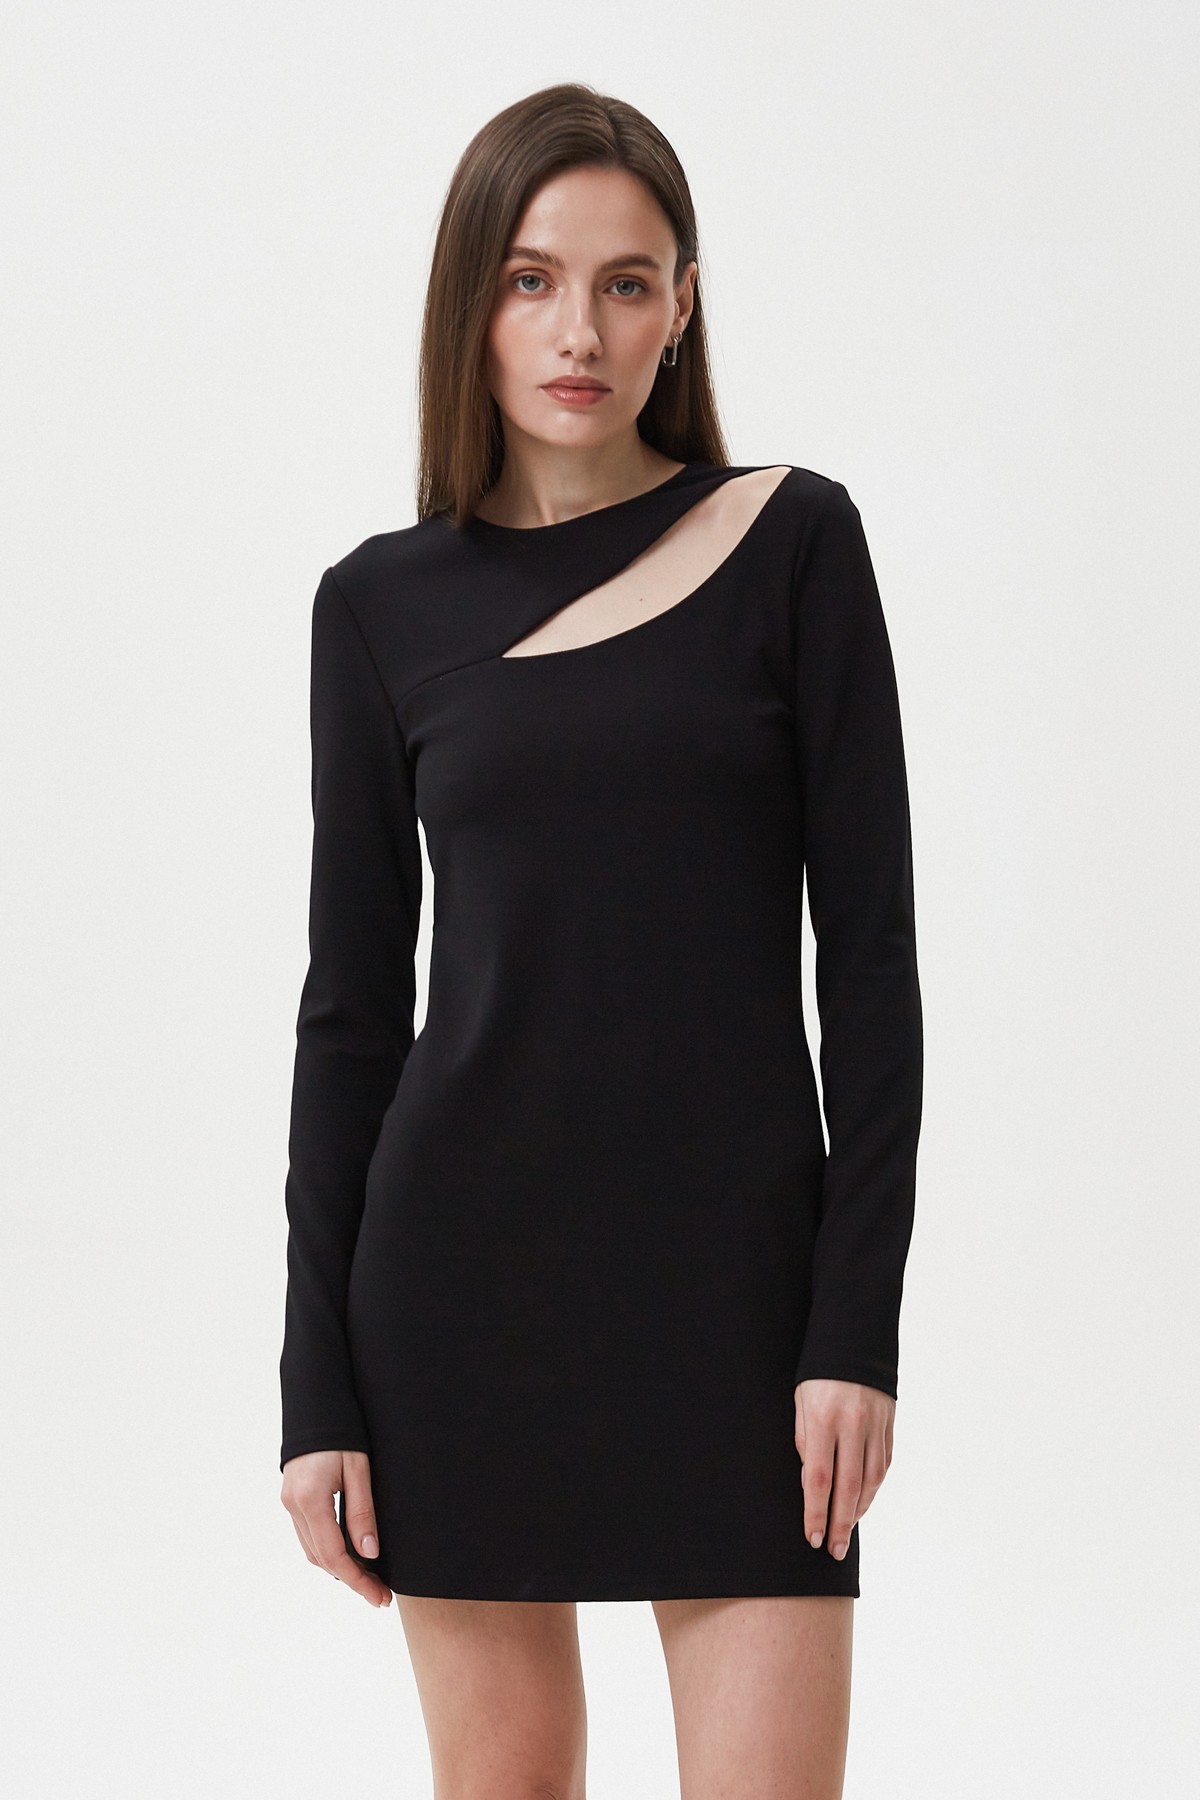 Black short viscose dress with a shoulder cut out